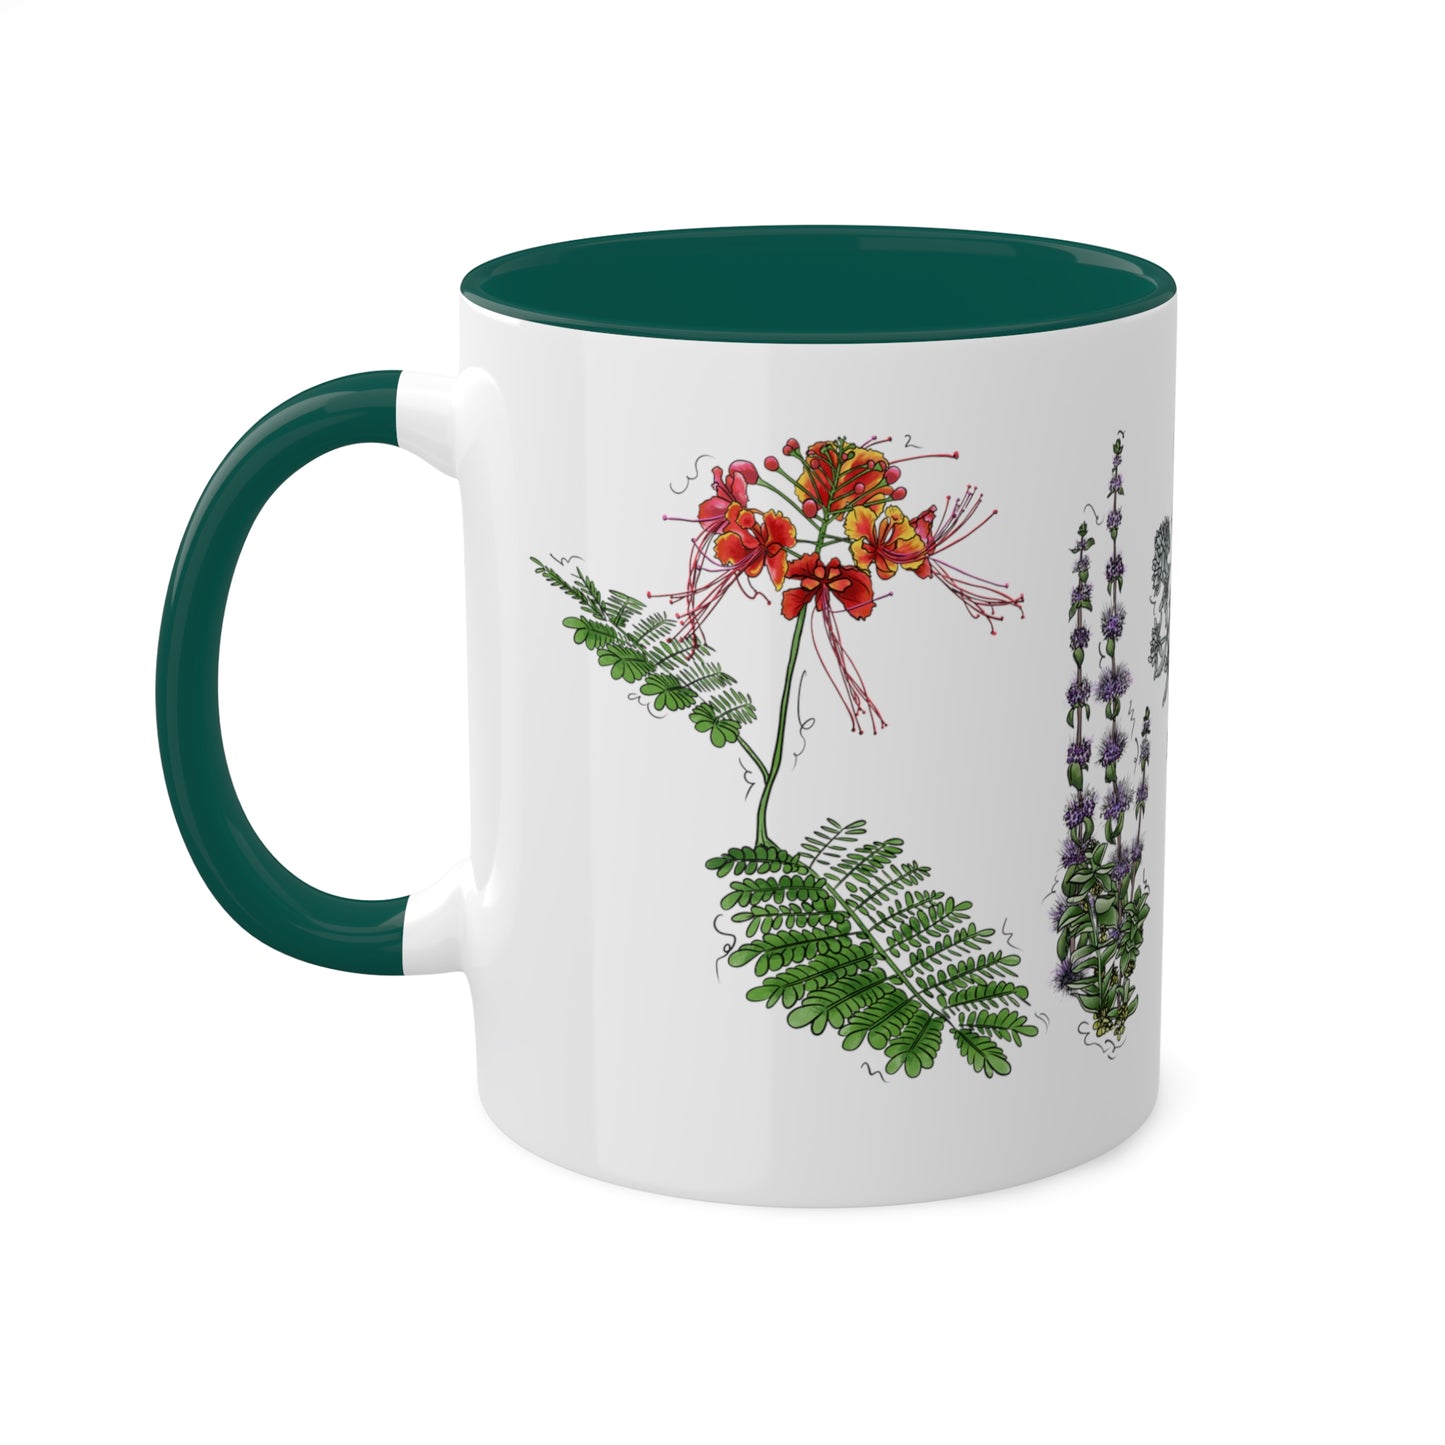 Pro-Choice Plants - Mug